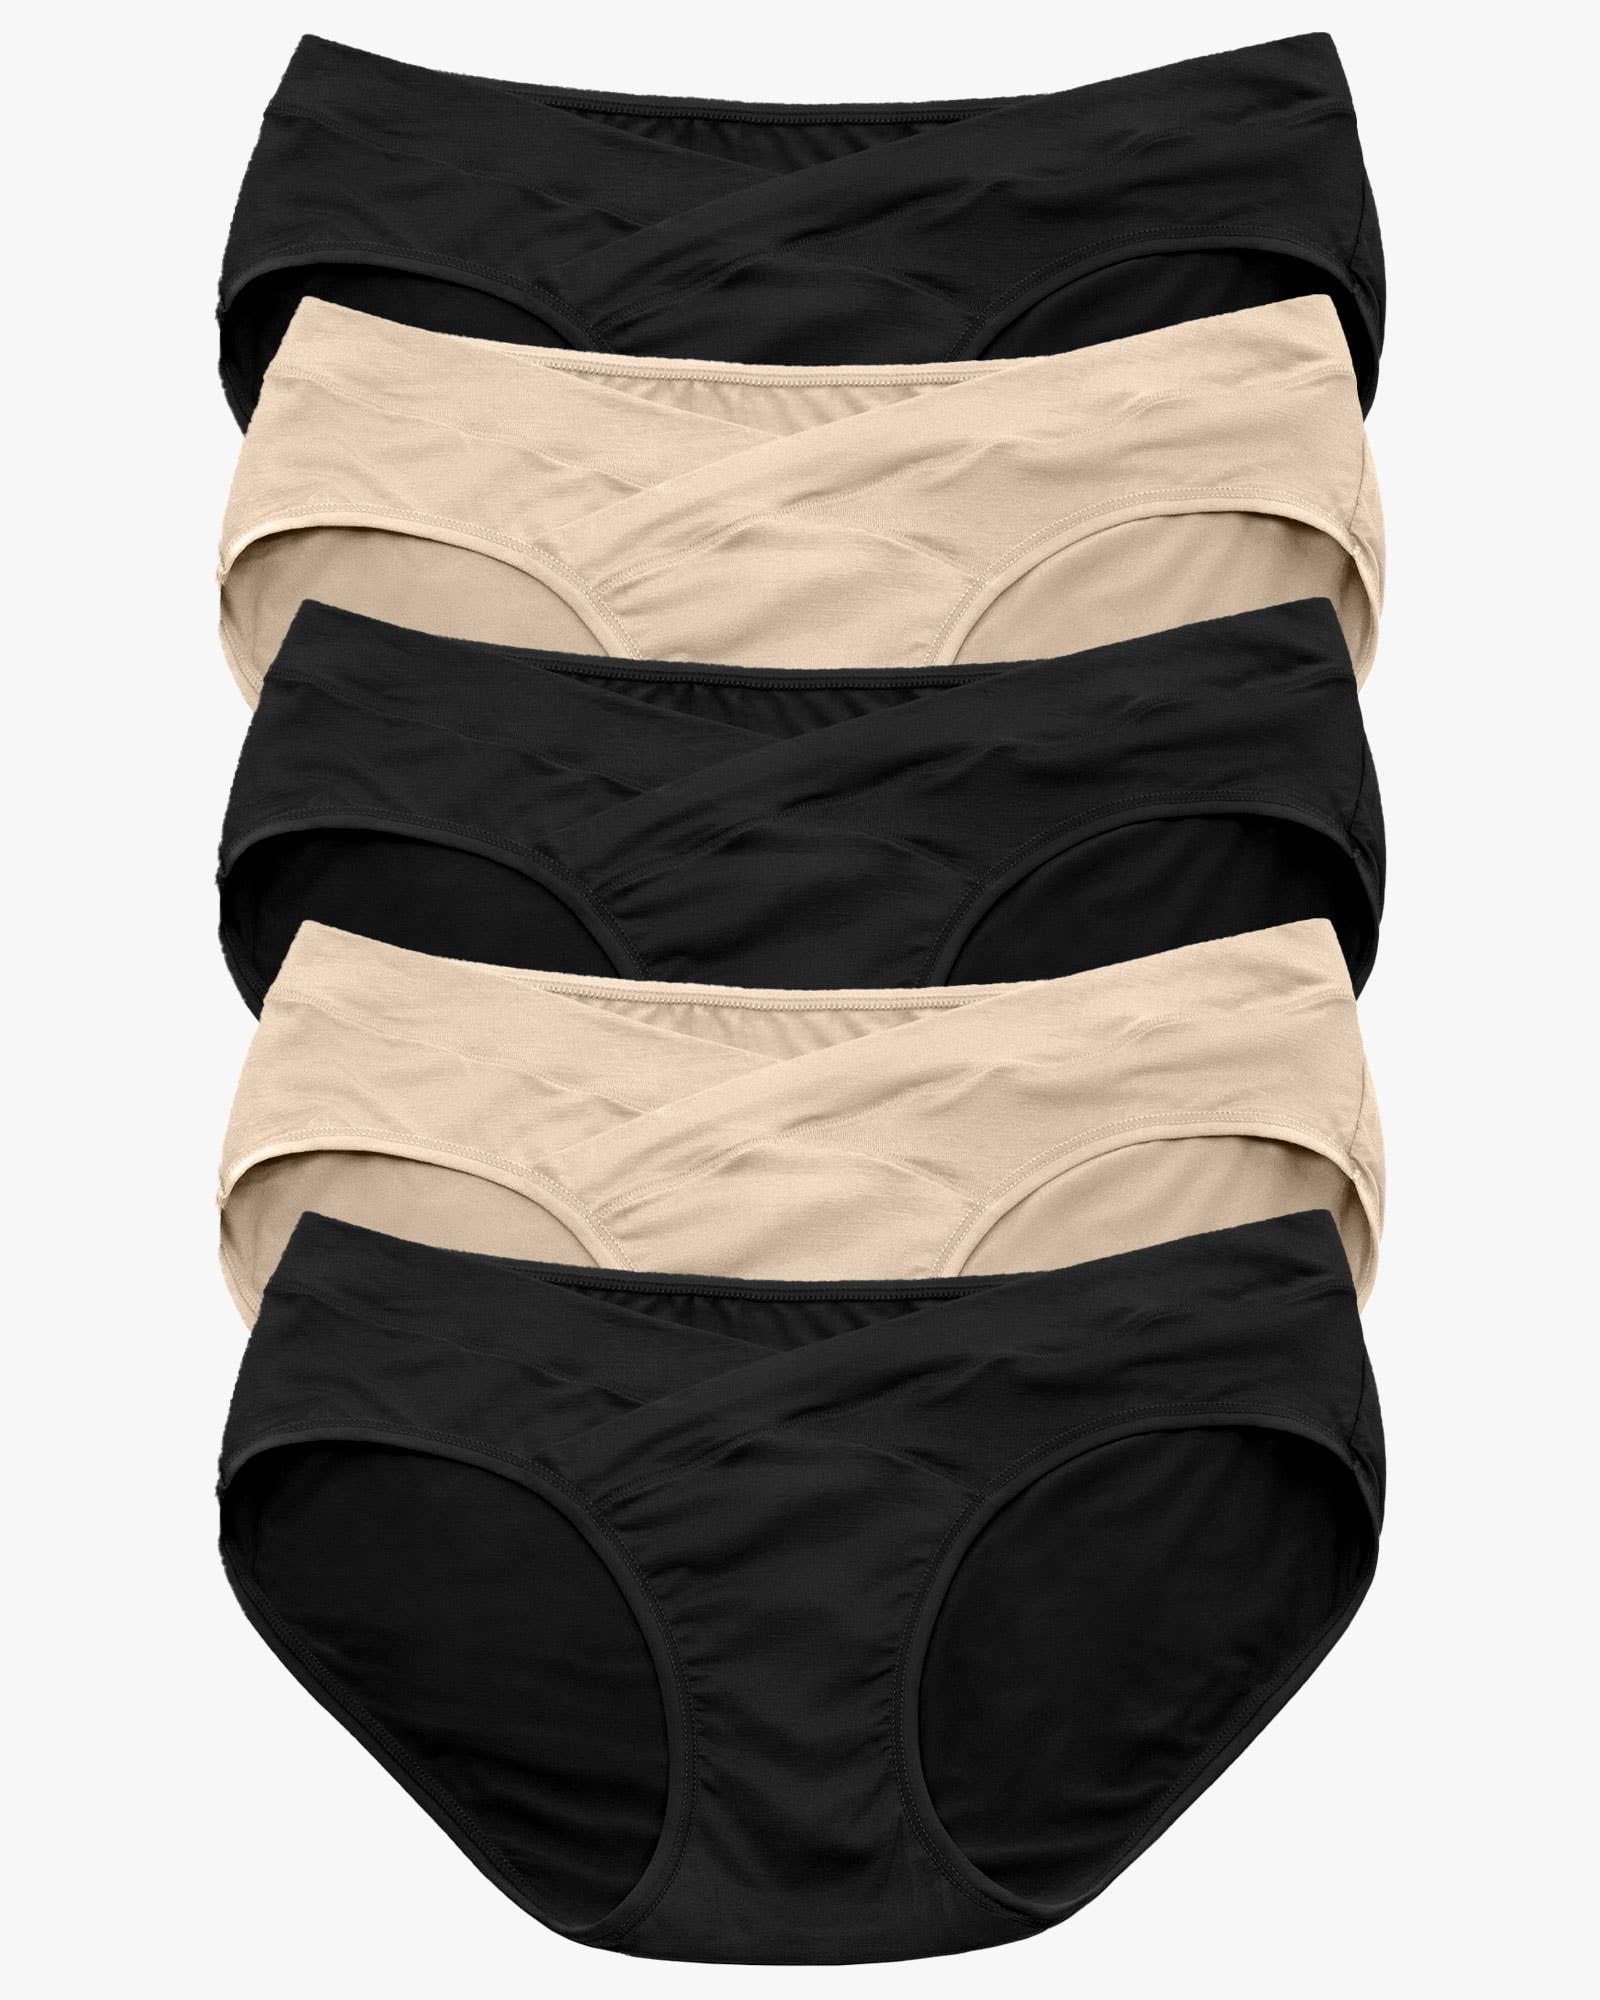 Child panties - Organic cotton underwear